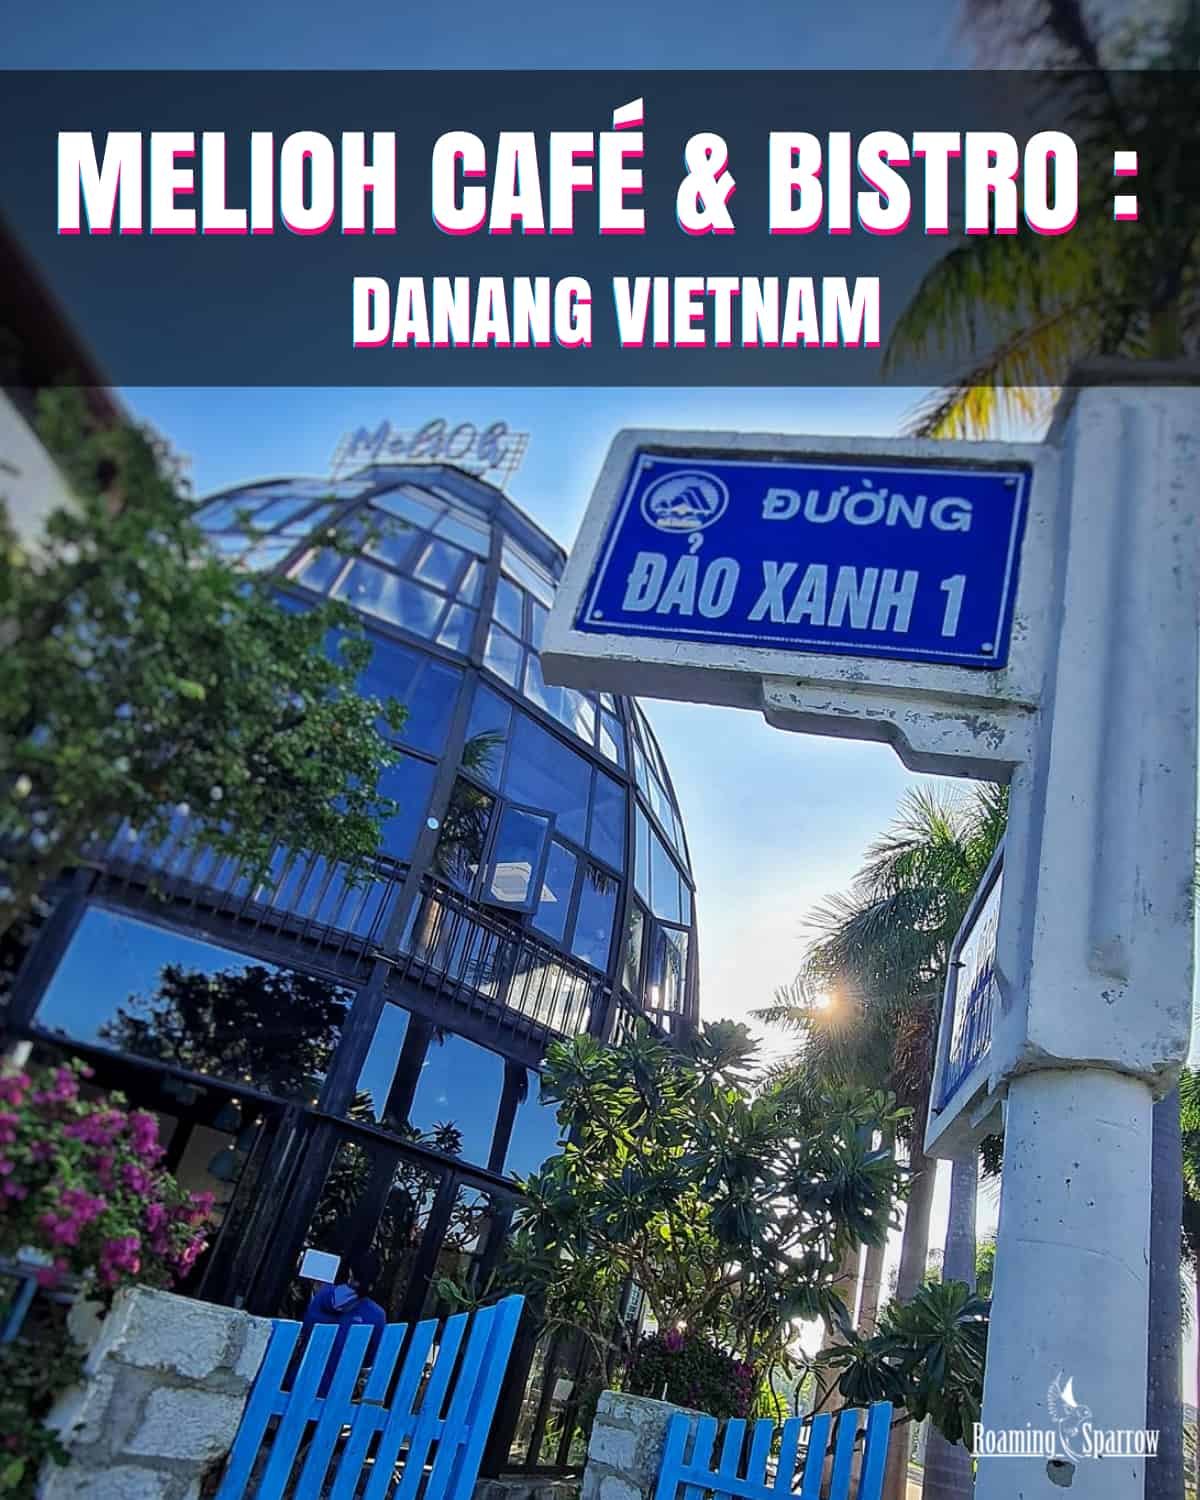 MeliOh Cafe and Bistro : Danang Vietnam